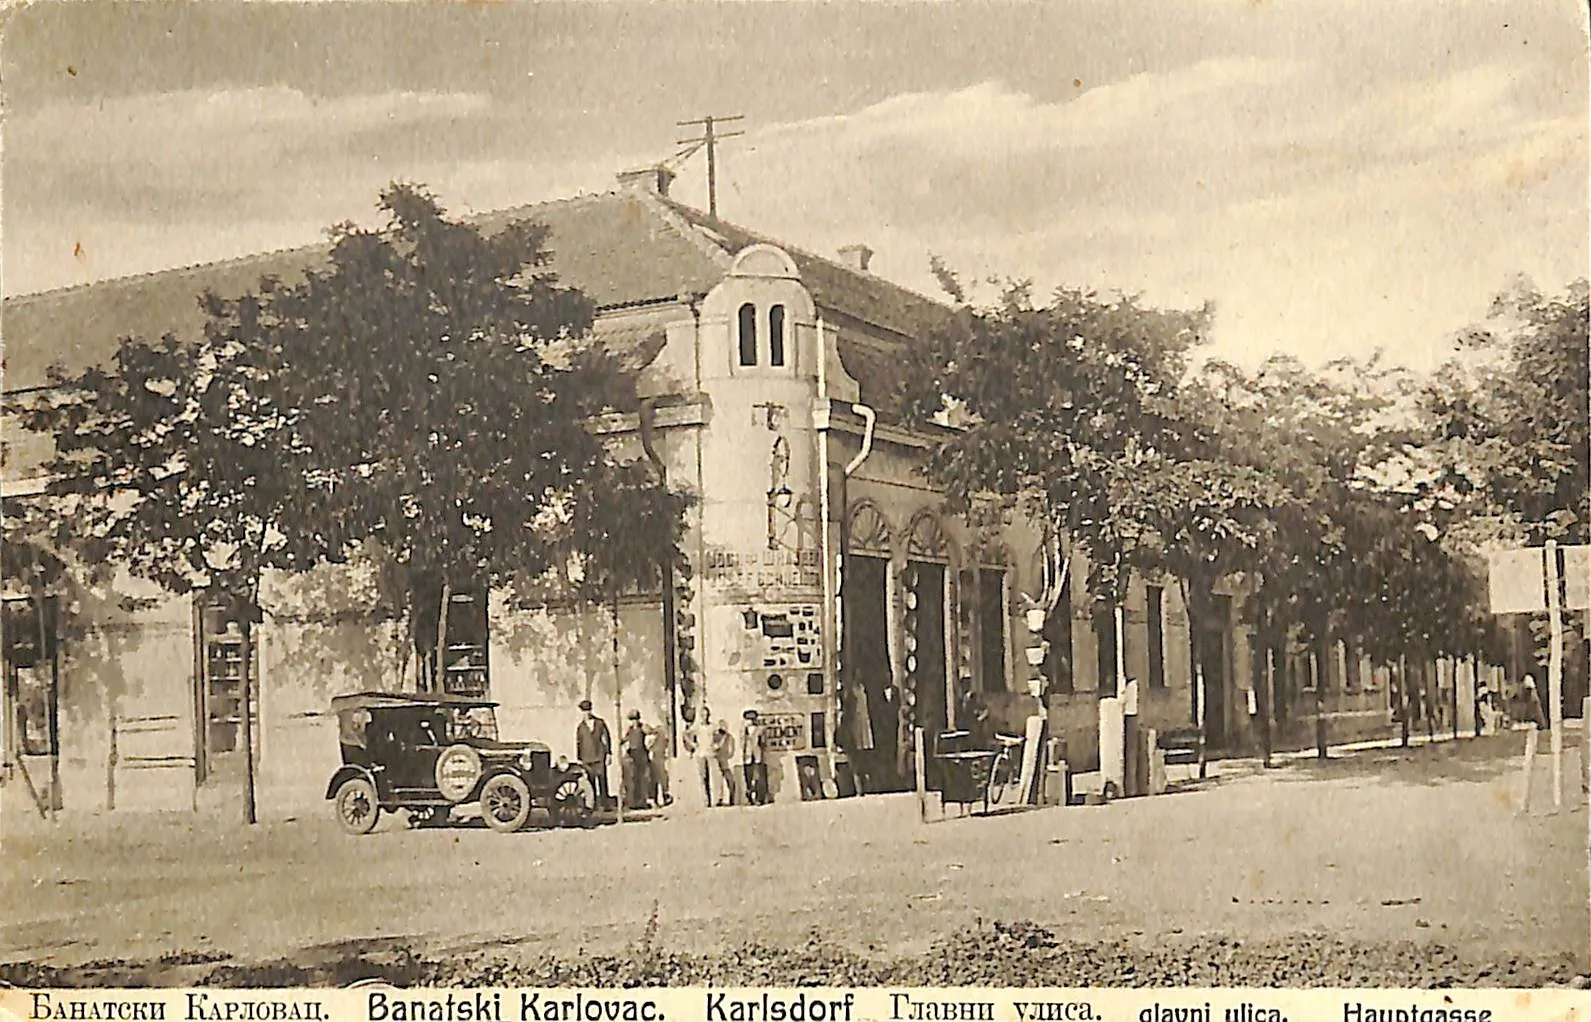 Photo showing: Banatski Karlovac on the postcard, the main street